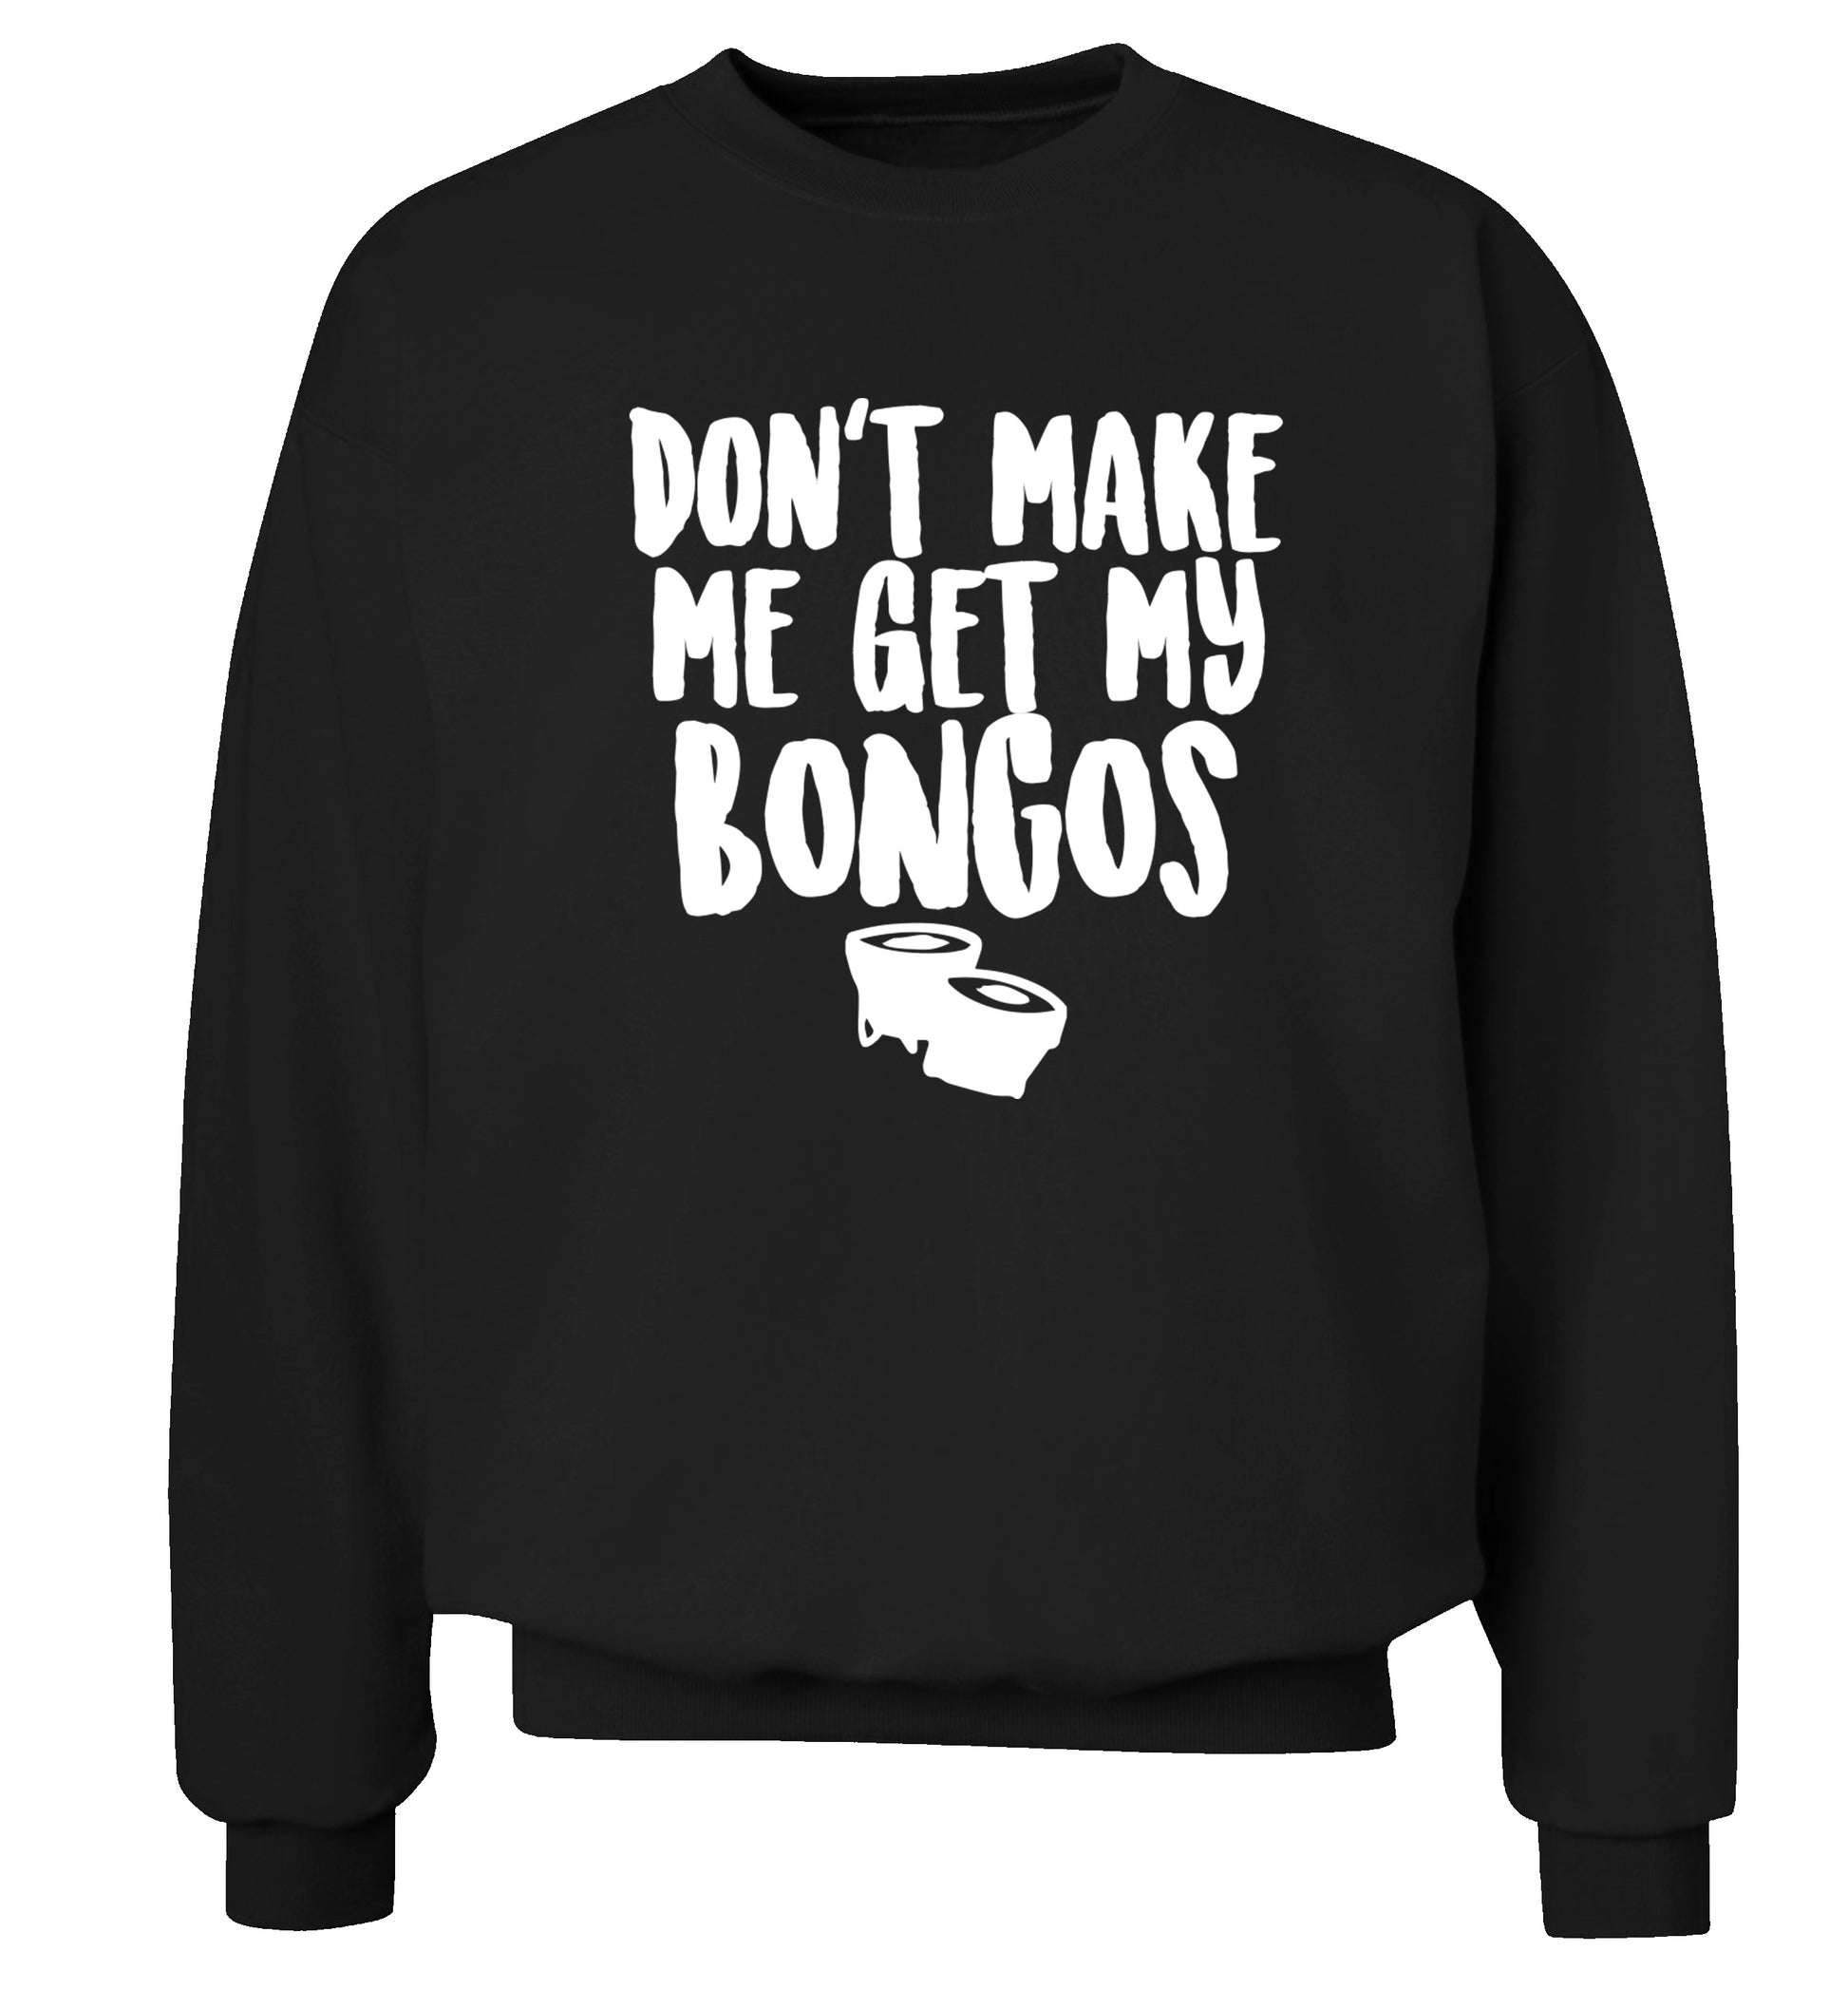 Don't make me get my bongos Adult's unisex black Sweater 2XL